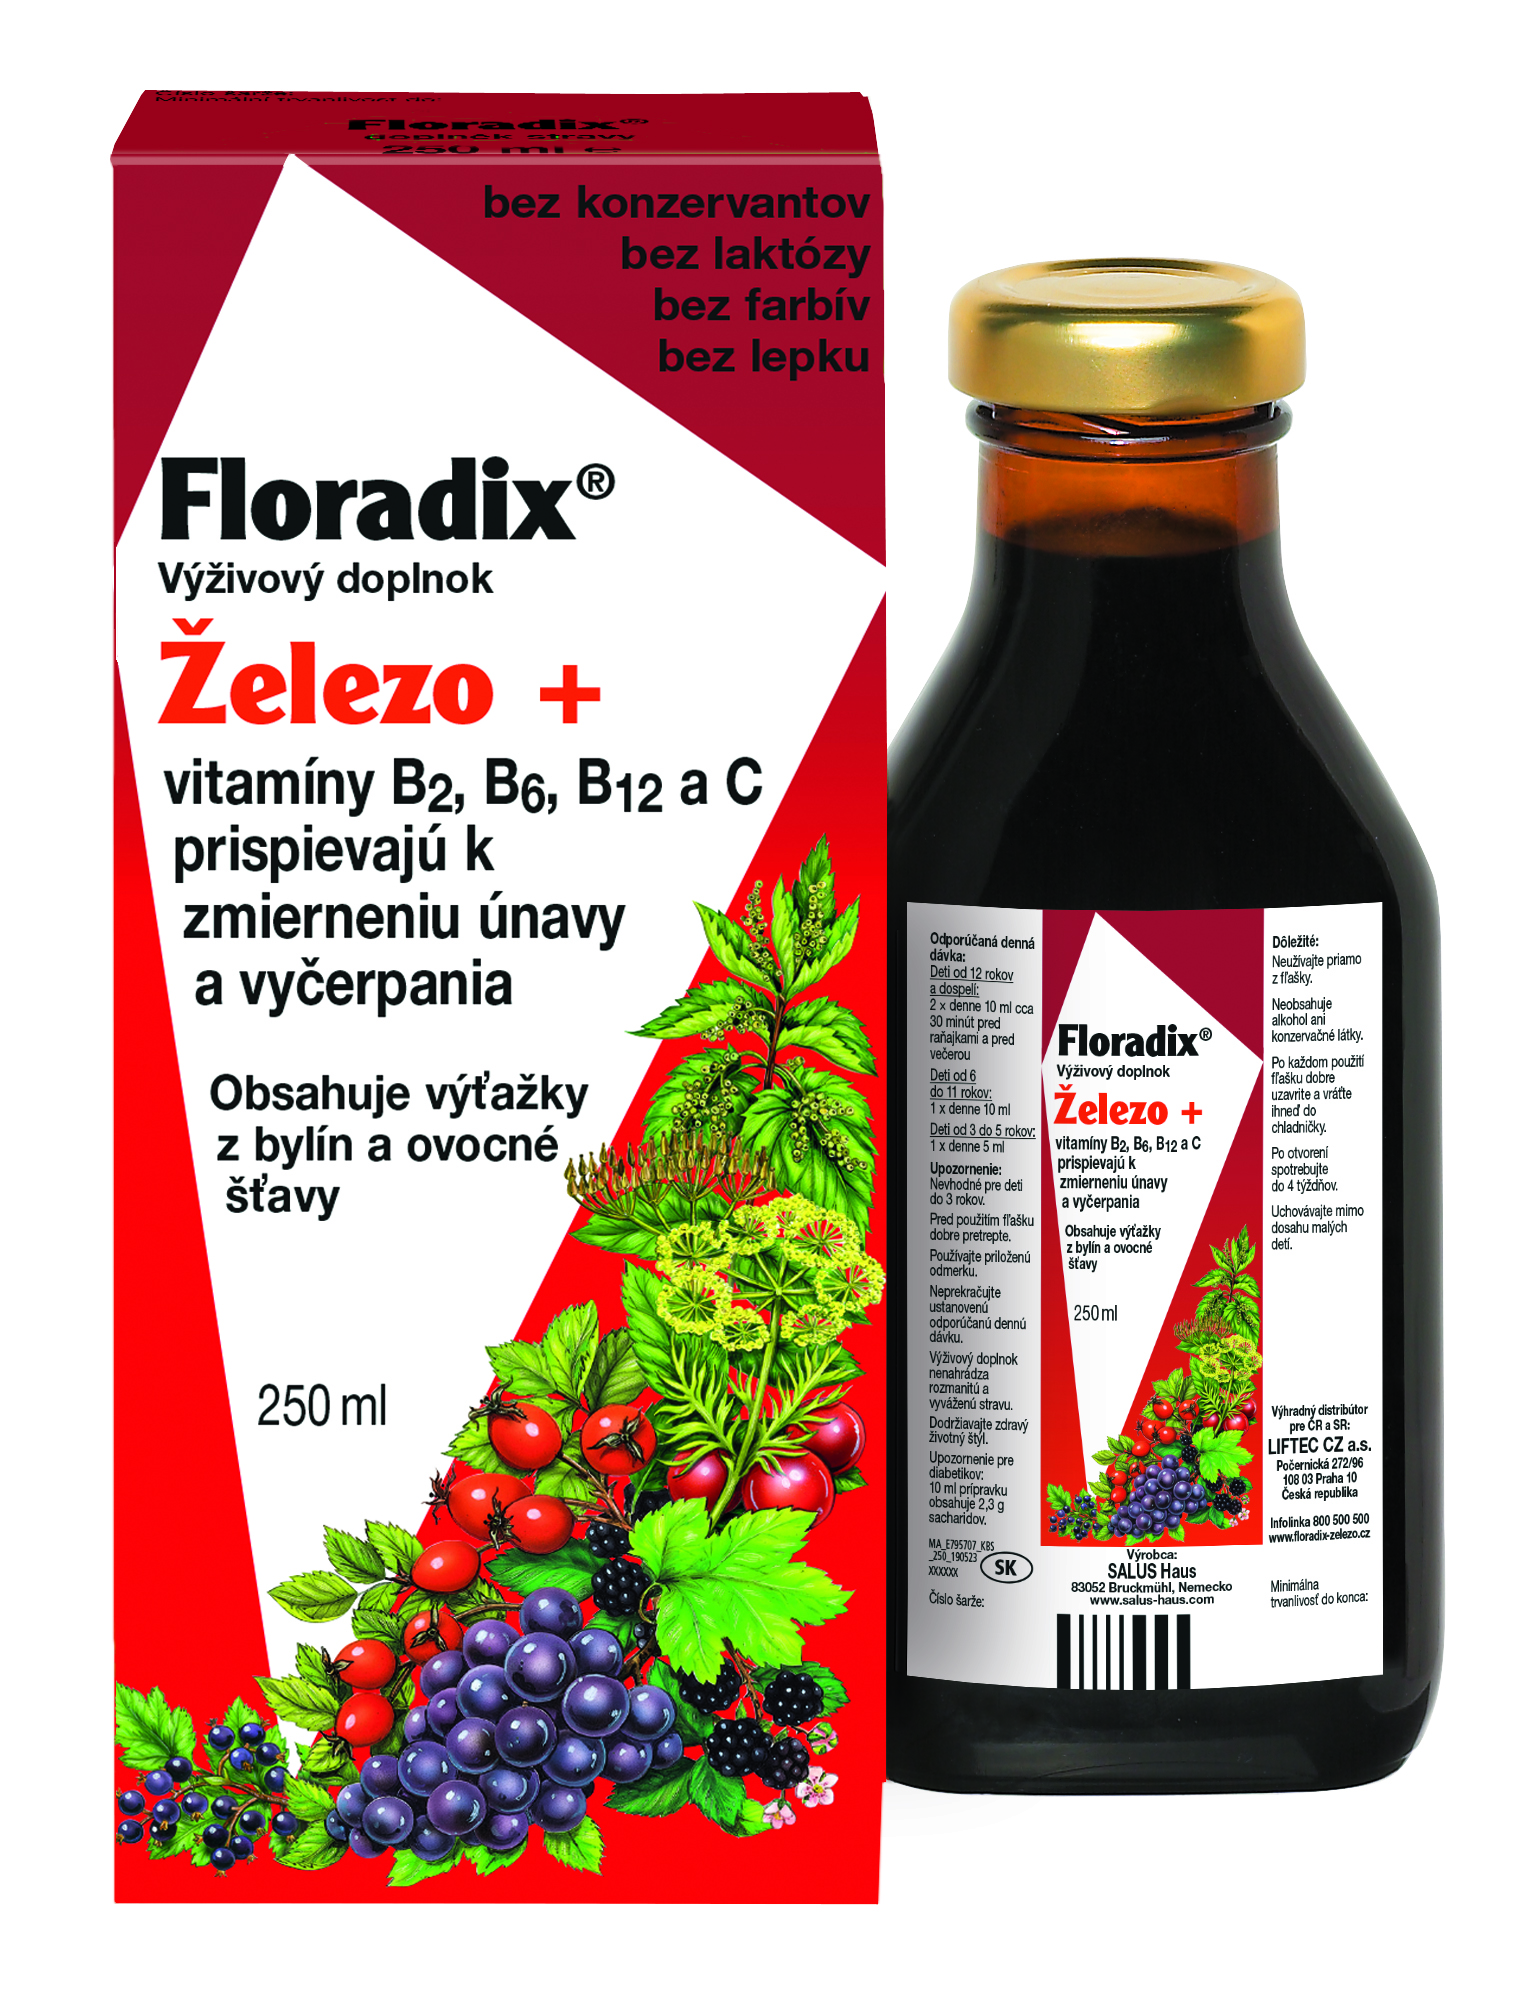 Floradix Tekuté železo + na zmiernenie únavy a vyčerpania